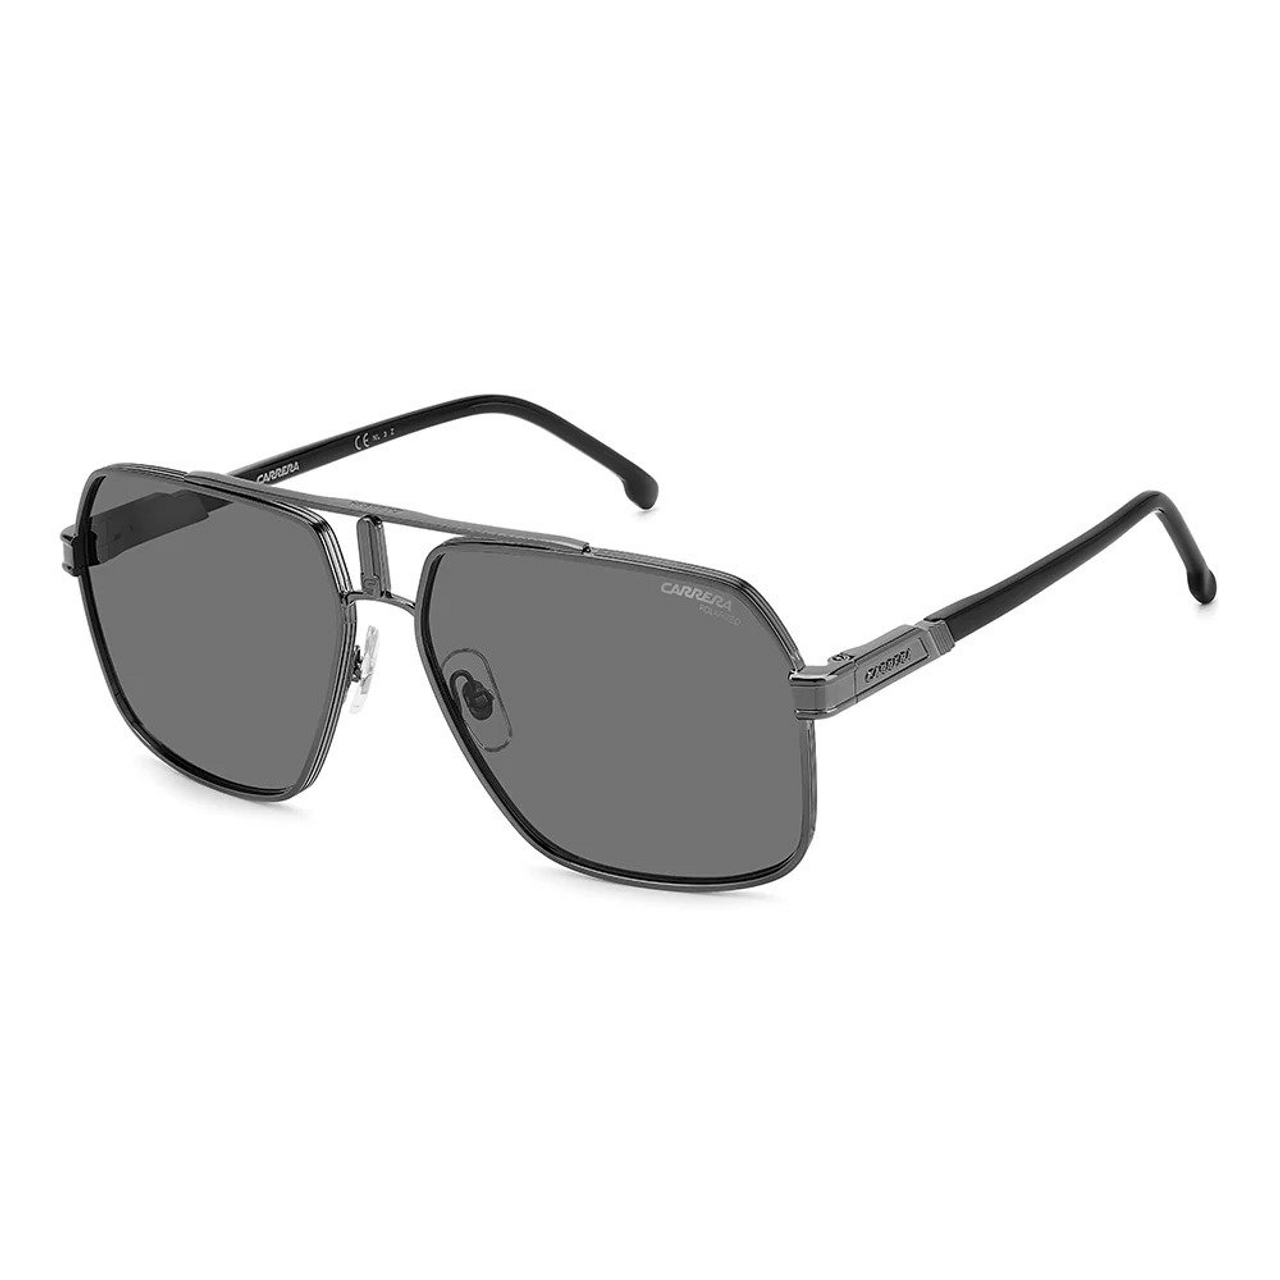 Carrera Polarized Men's Sunglasses Discount Price | www.og6666.com